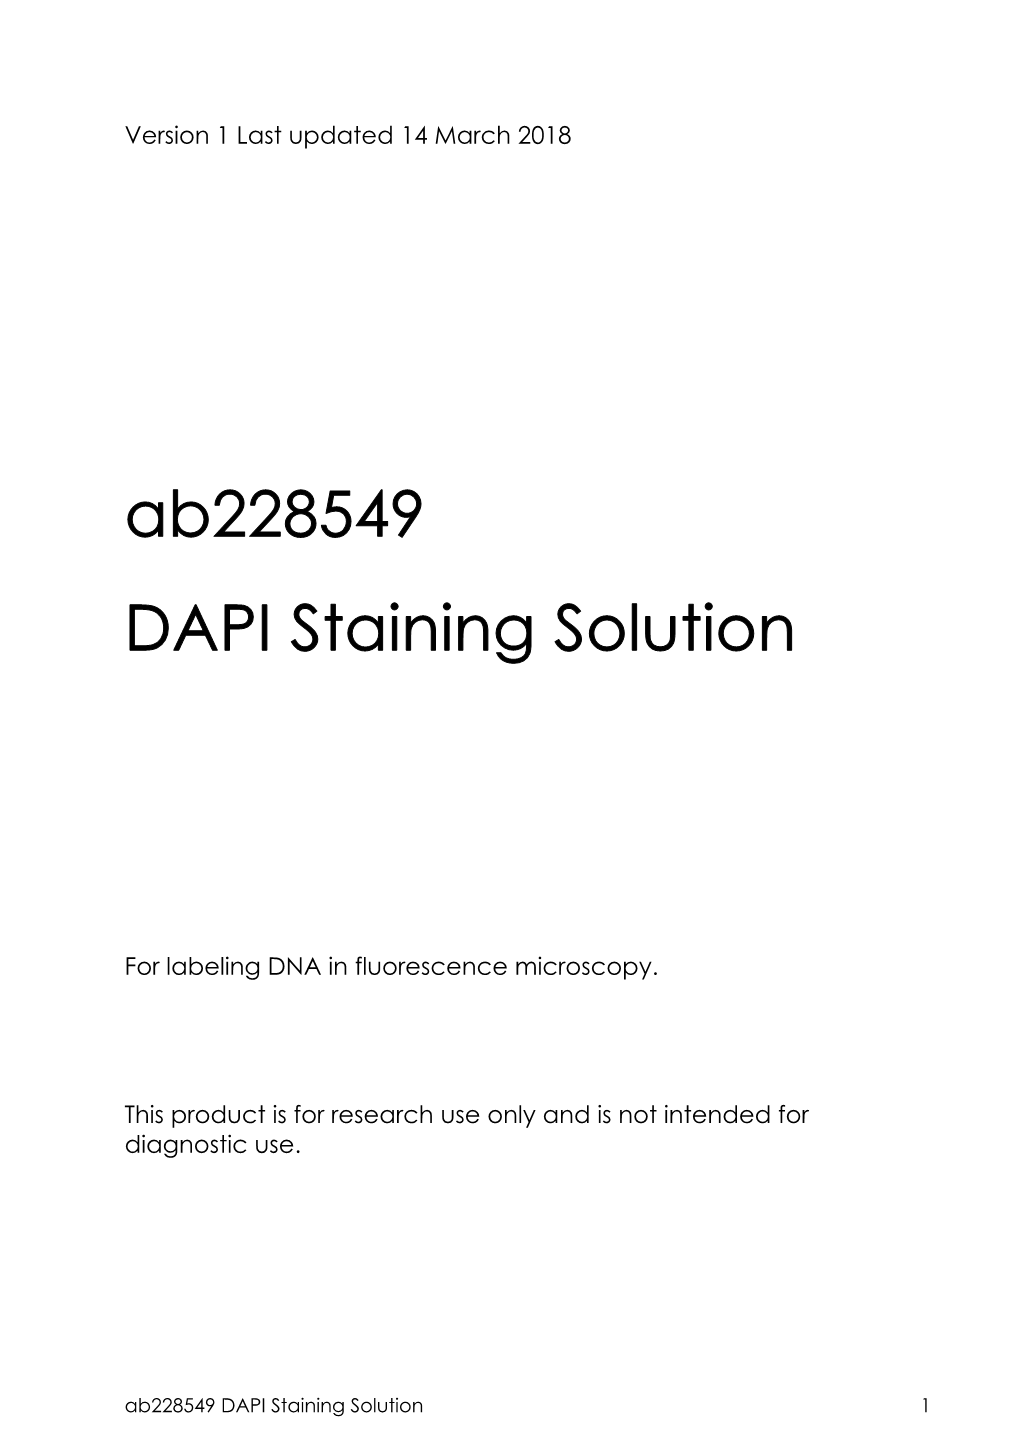 Ab228549 DAPI Staining Solution